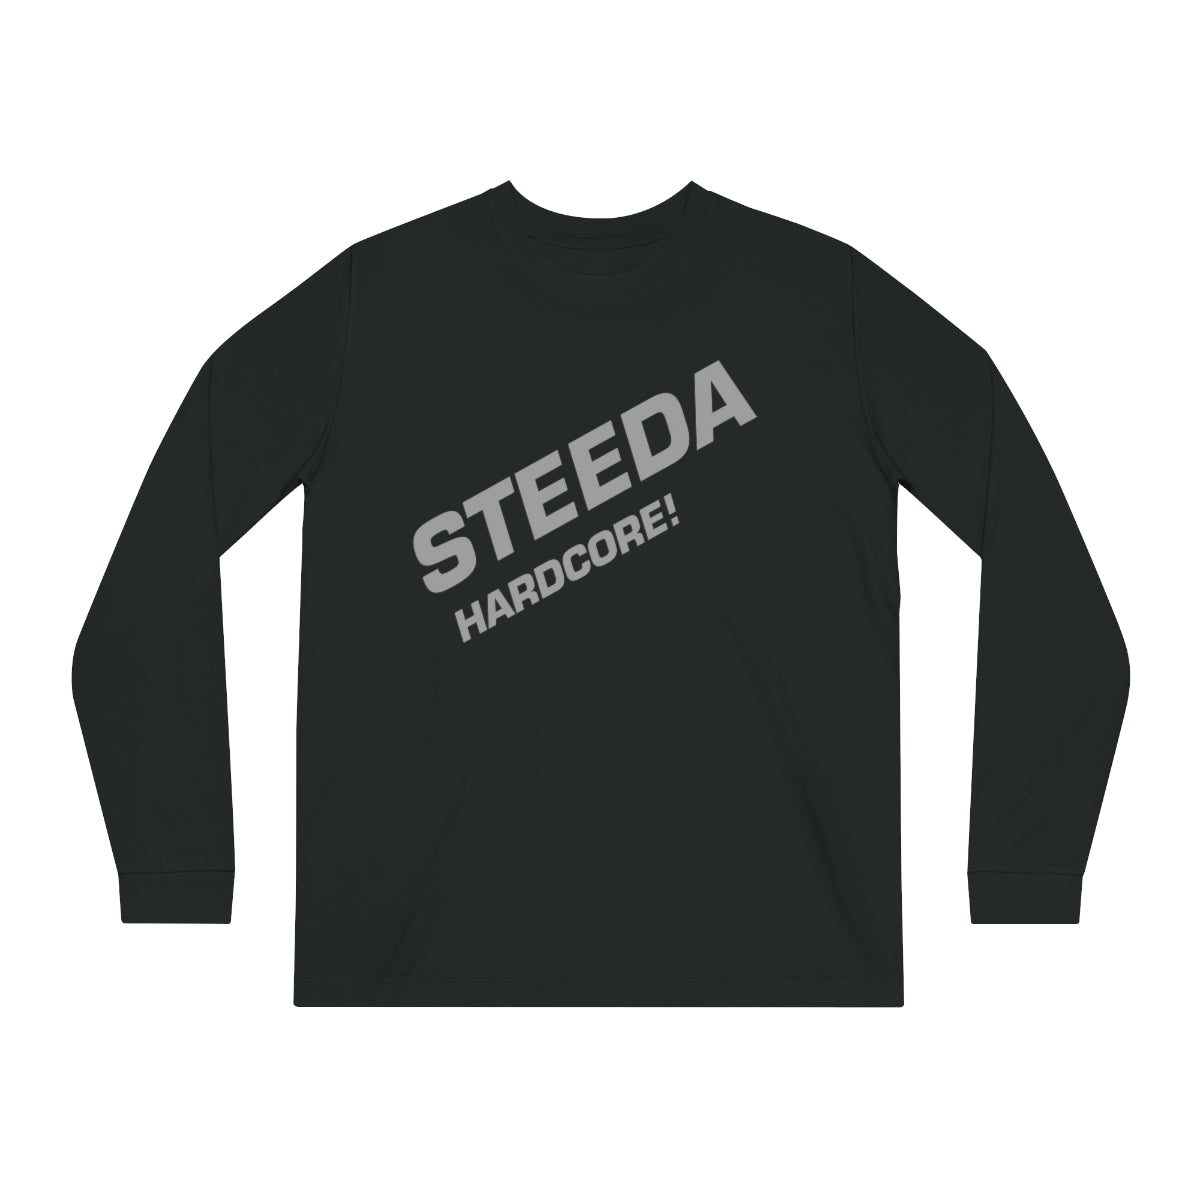 Steeda Unisex "Hardcore!" Camiseta de manga larga - Negro / Azul marino